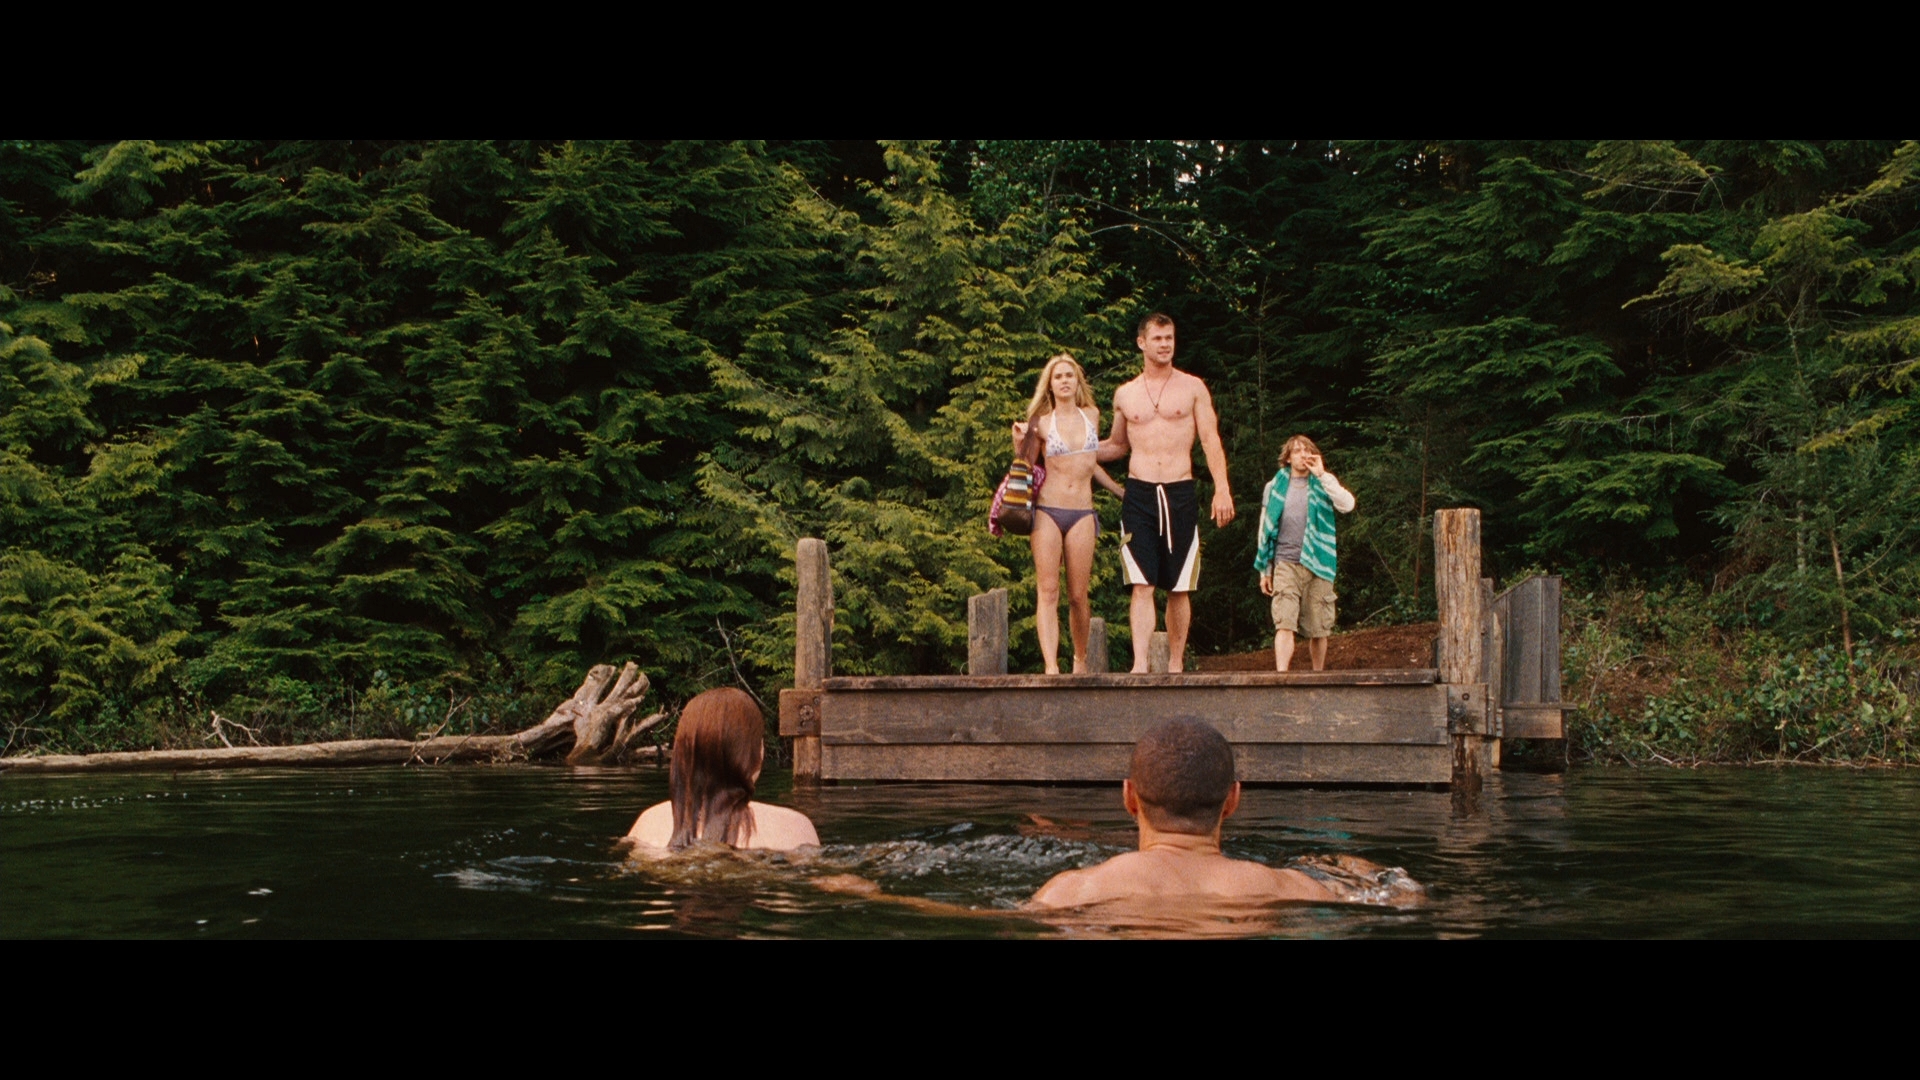 Lake o the woods nudist camp